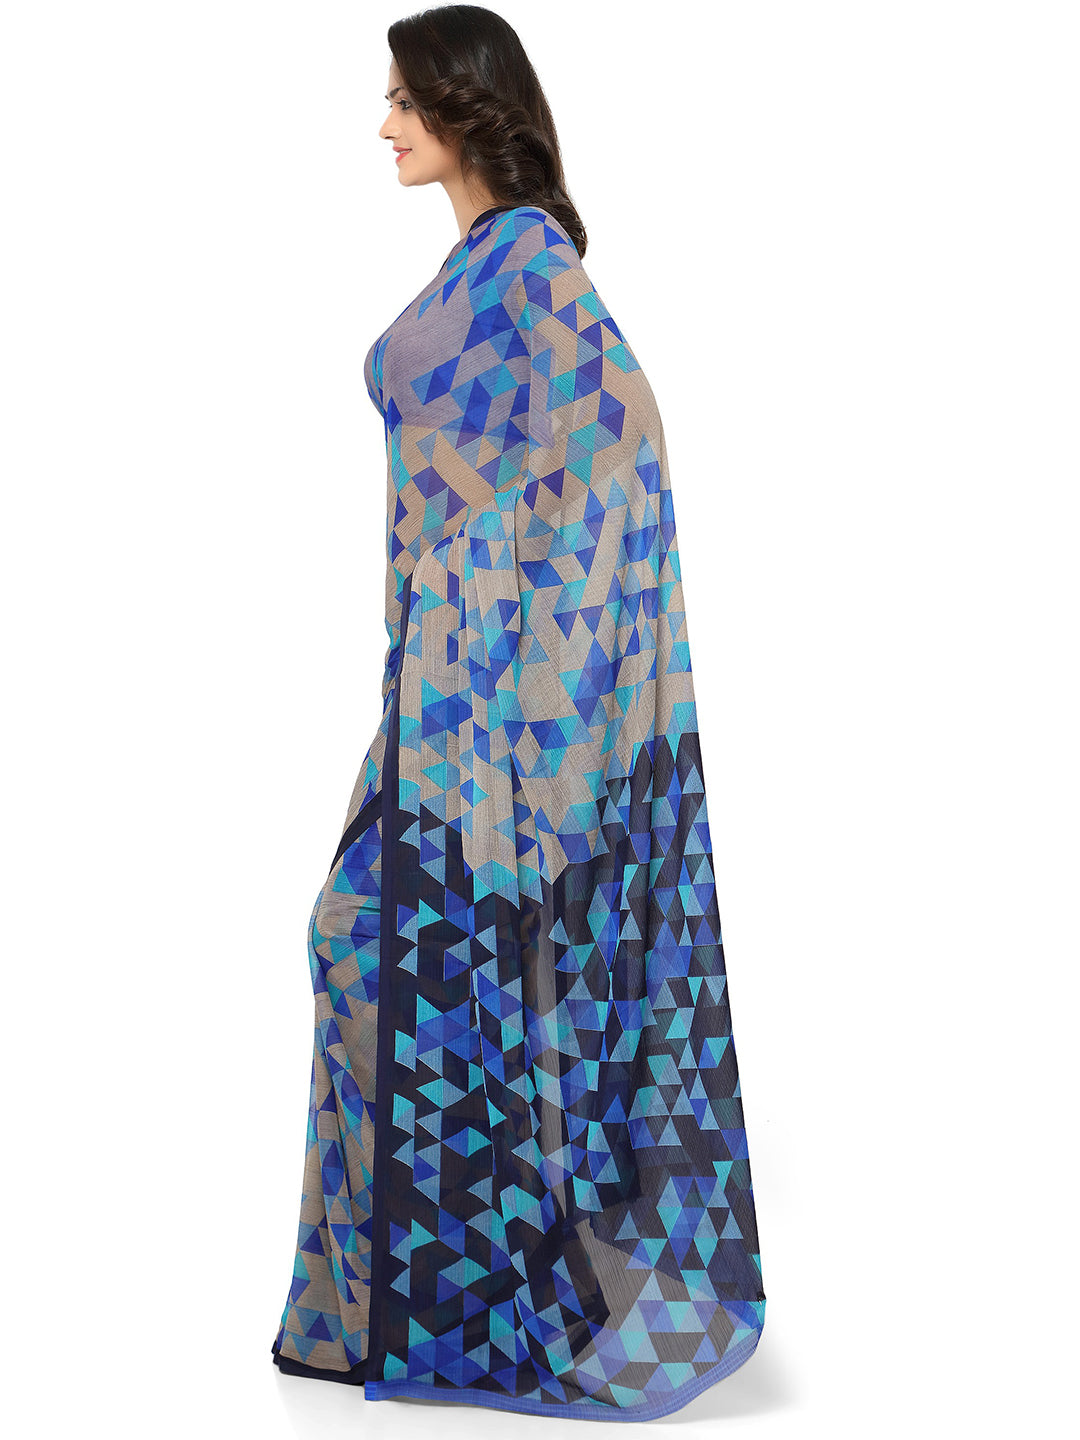 Women's Blue Chiffon Printed Saree - Ahika